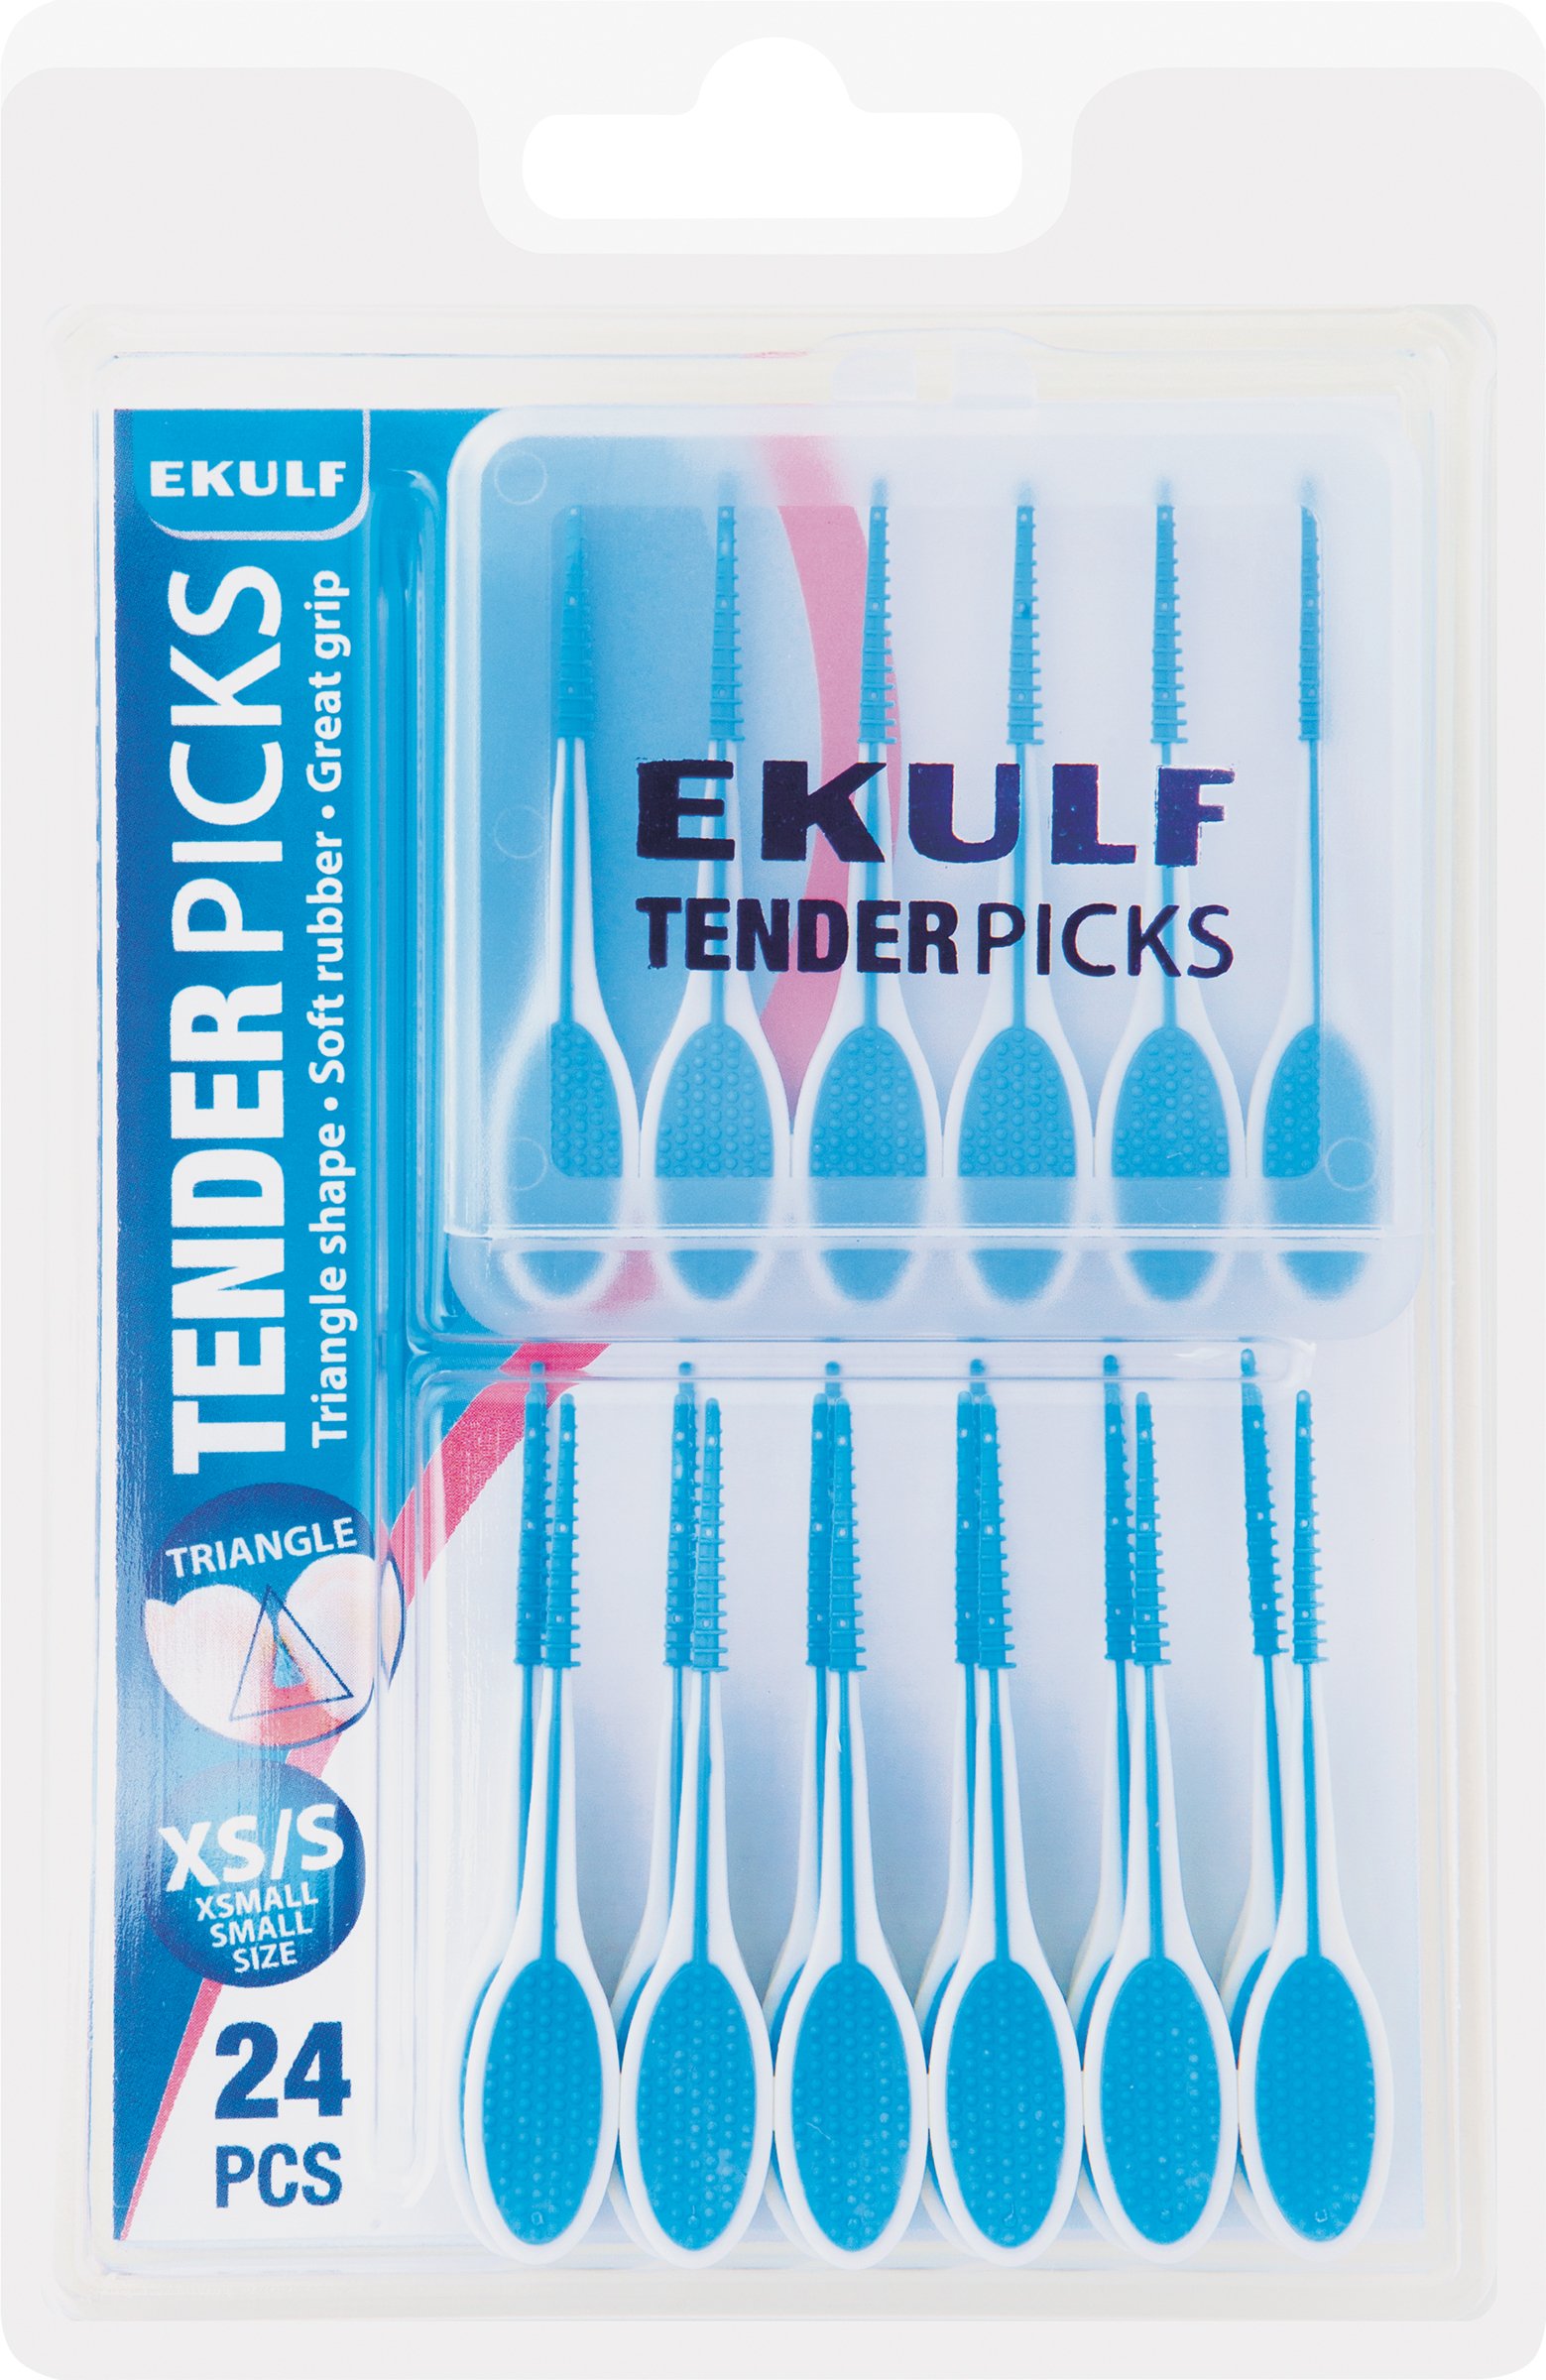 EKULF TenderPicks XS/S 24 st